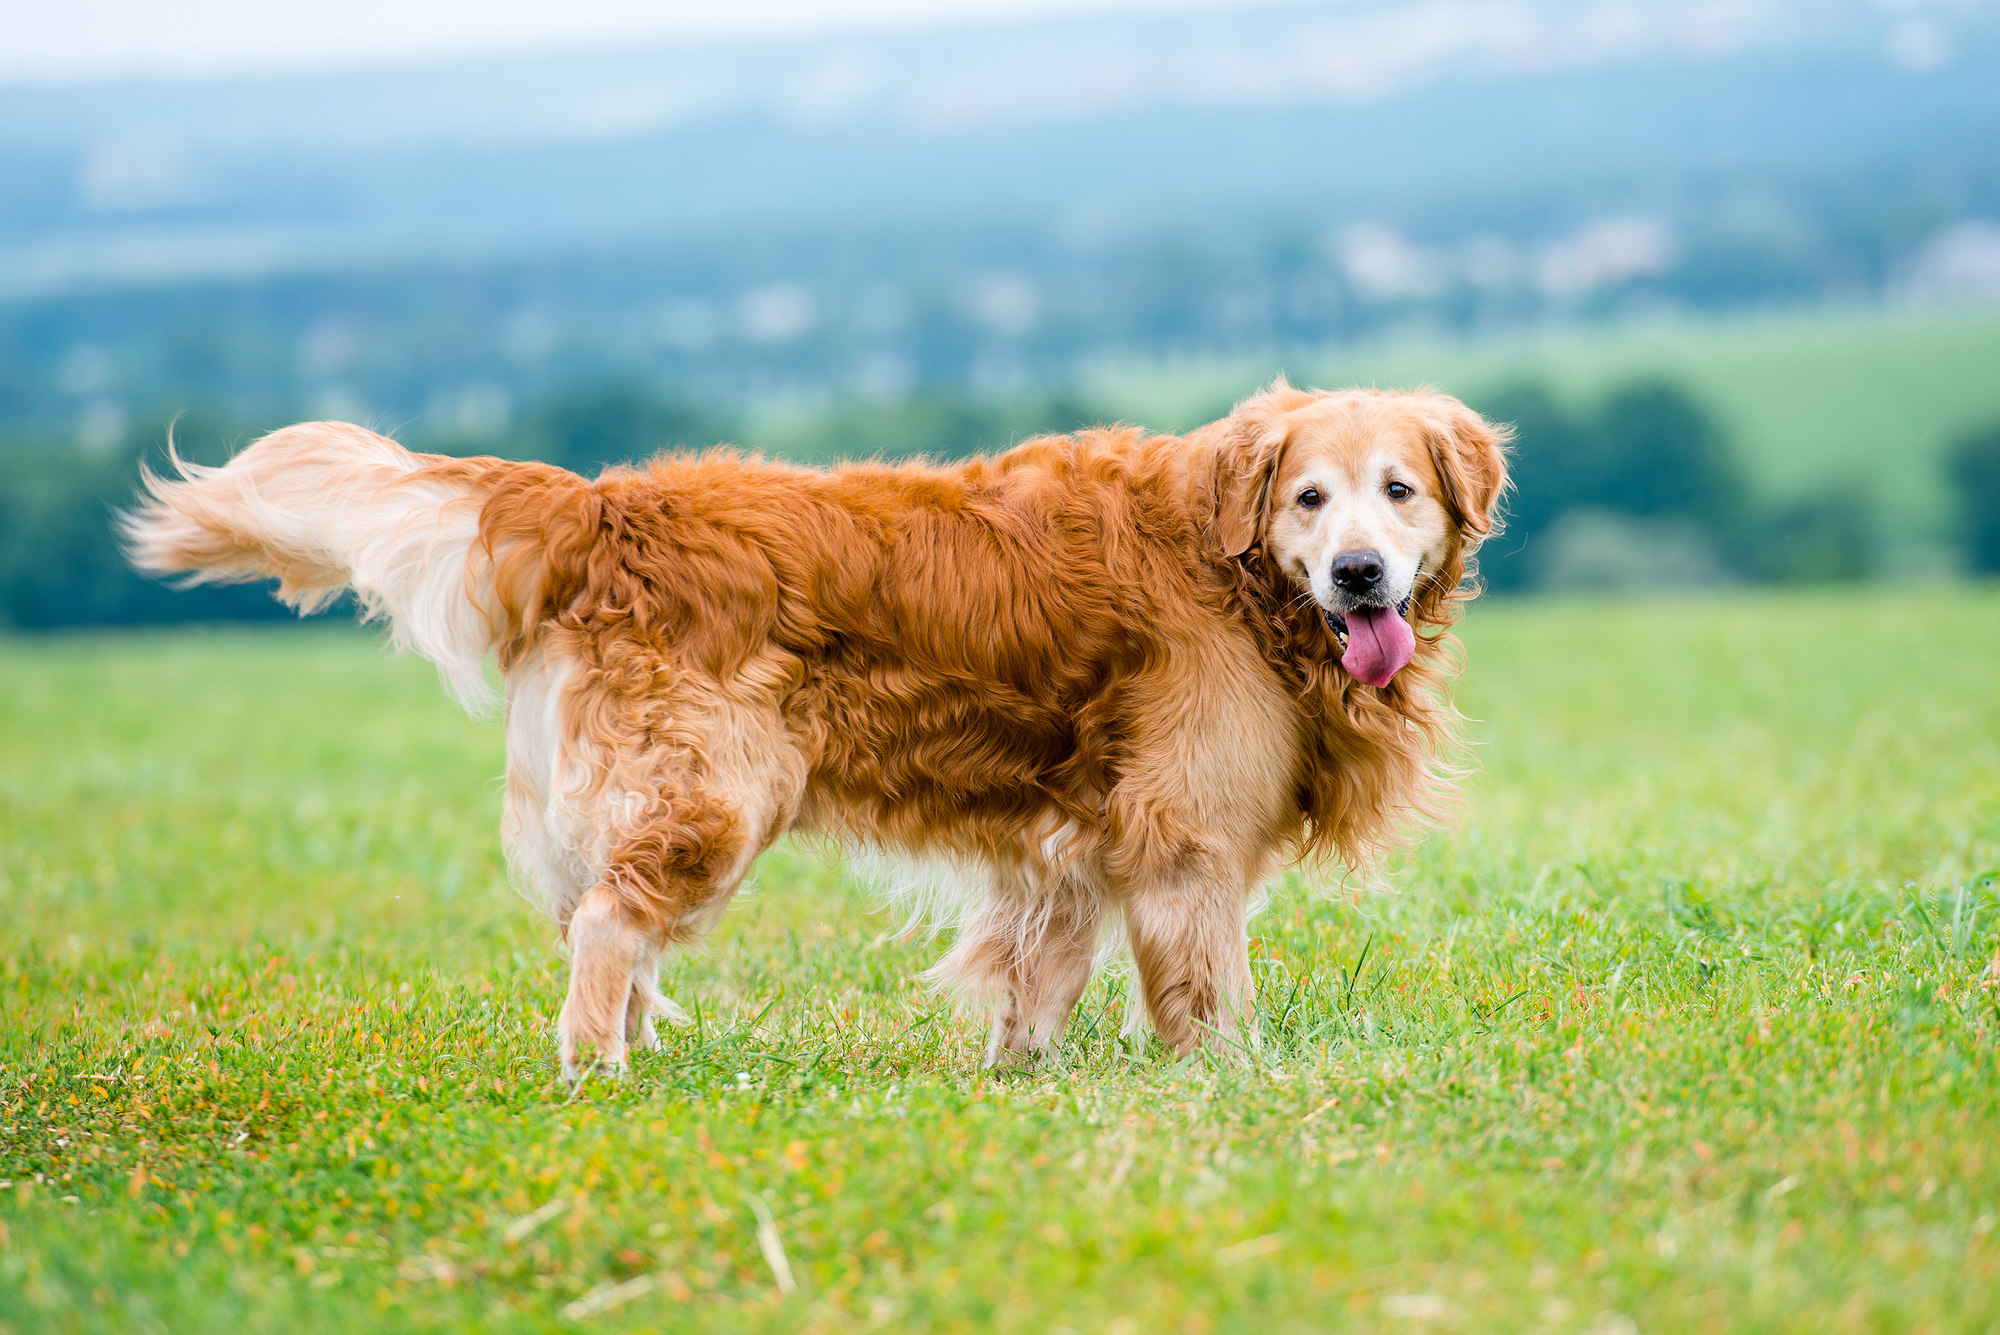 Do Golden Retrievers Make Good House Dogs